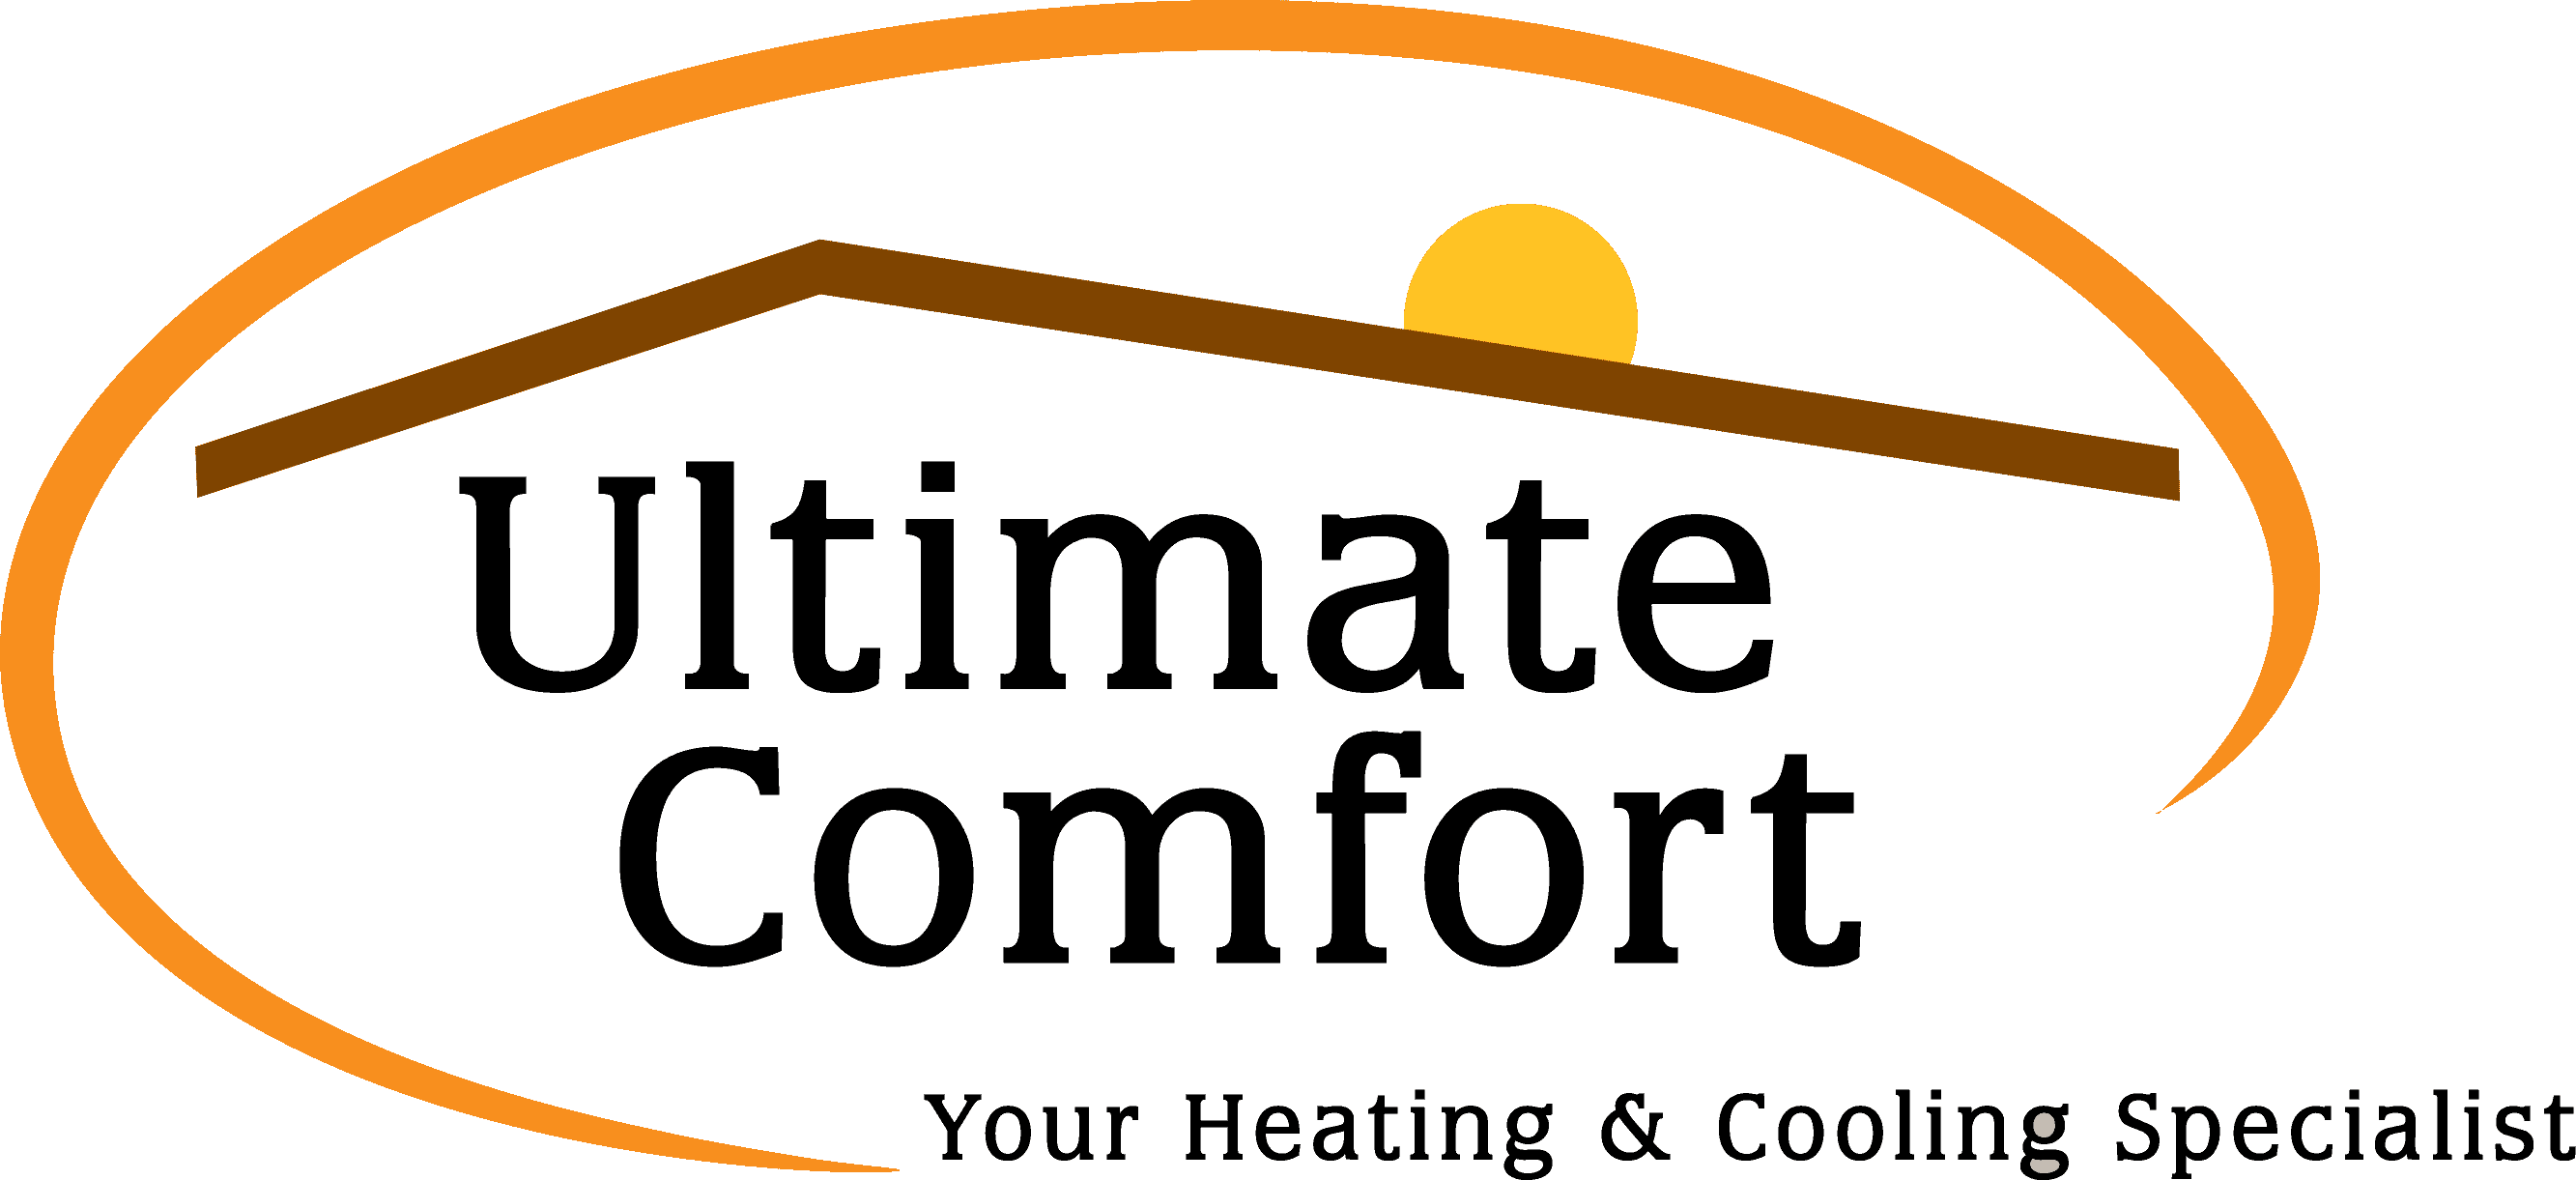 Ultimate Comfort logo transparent